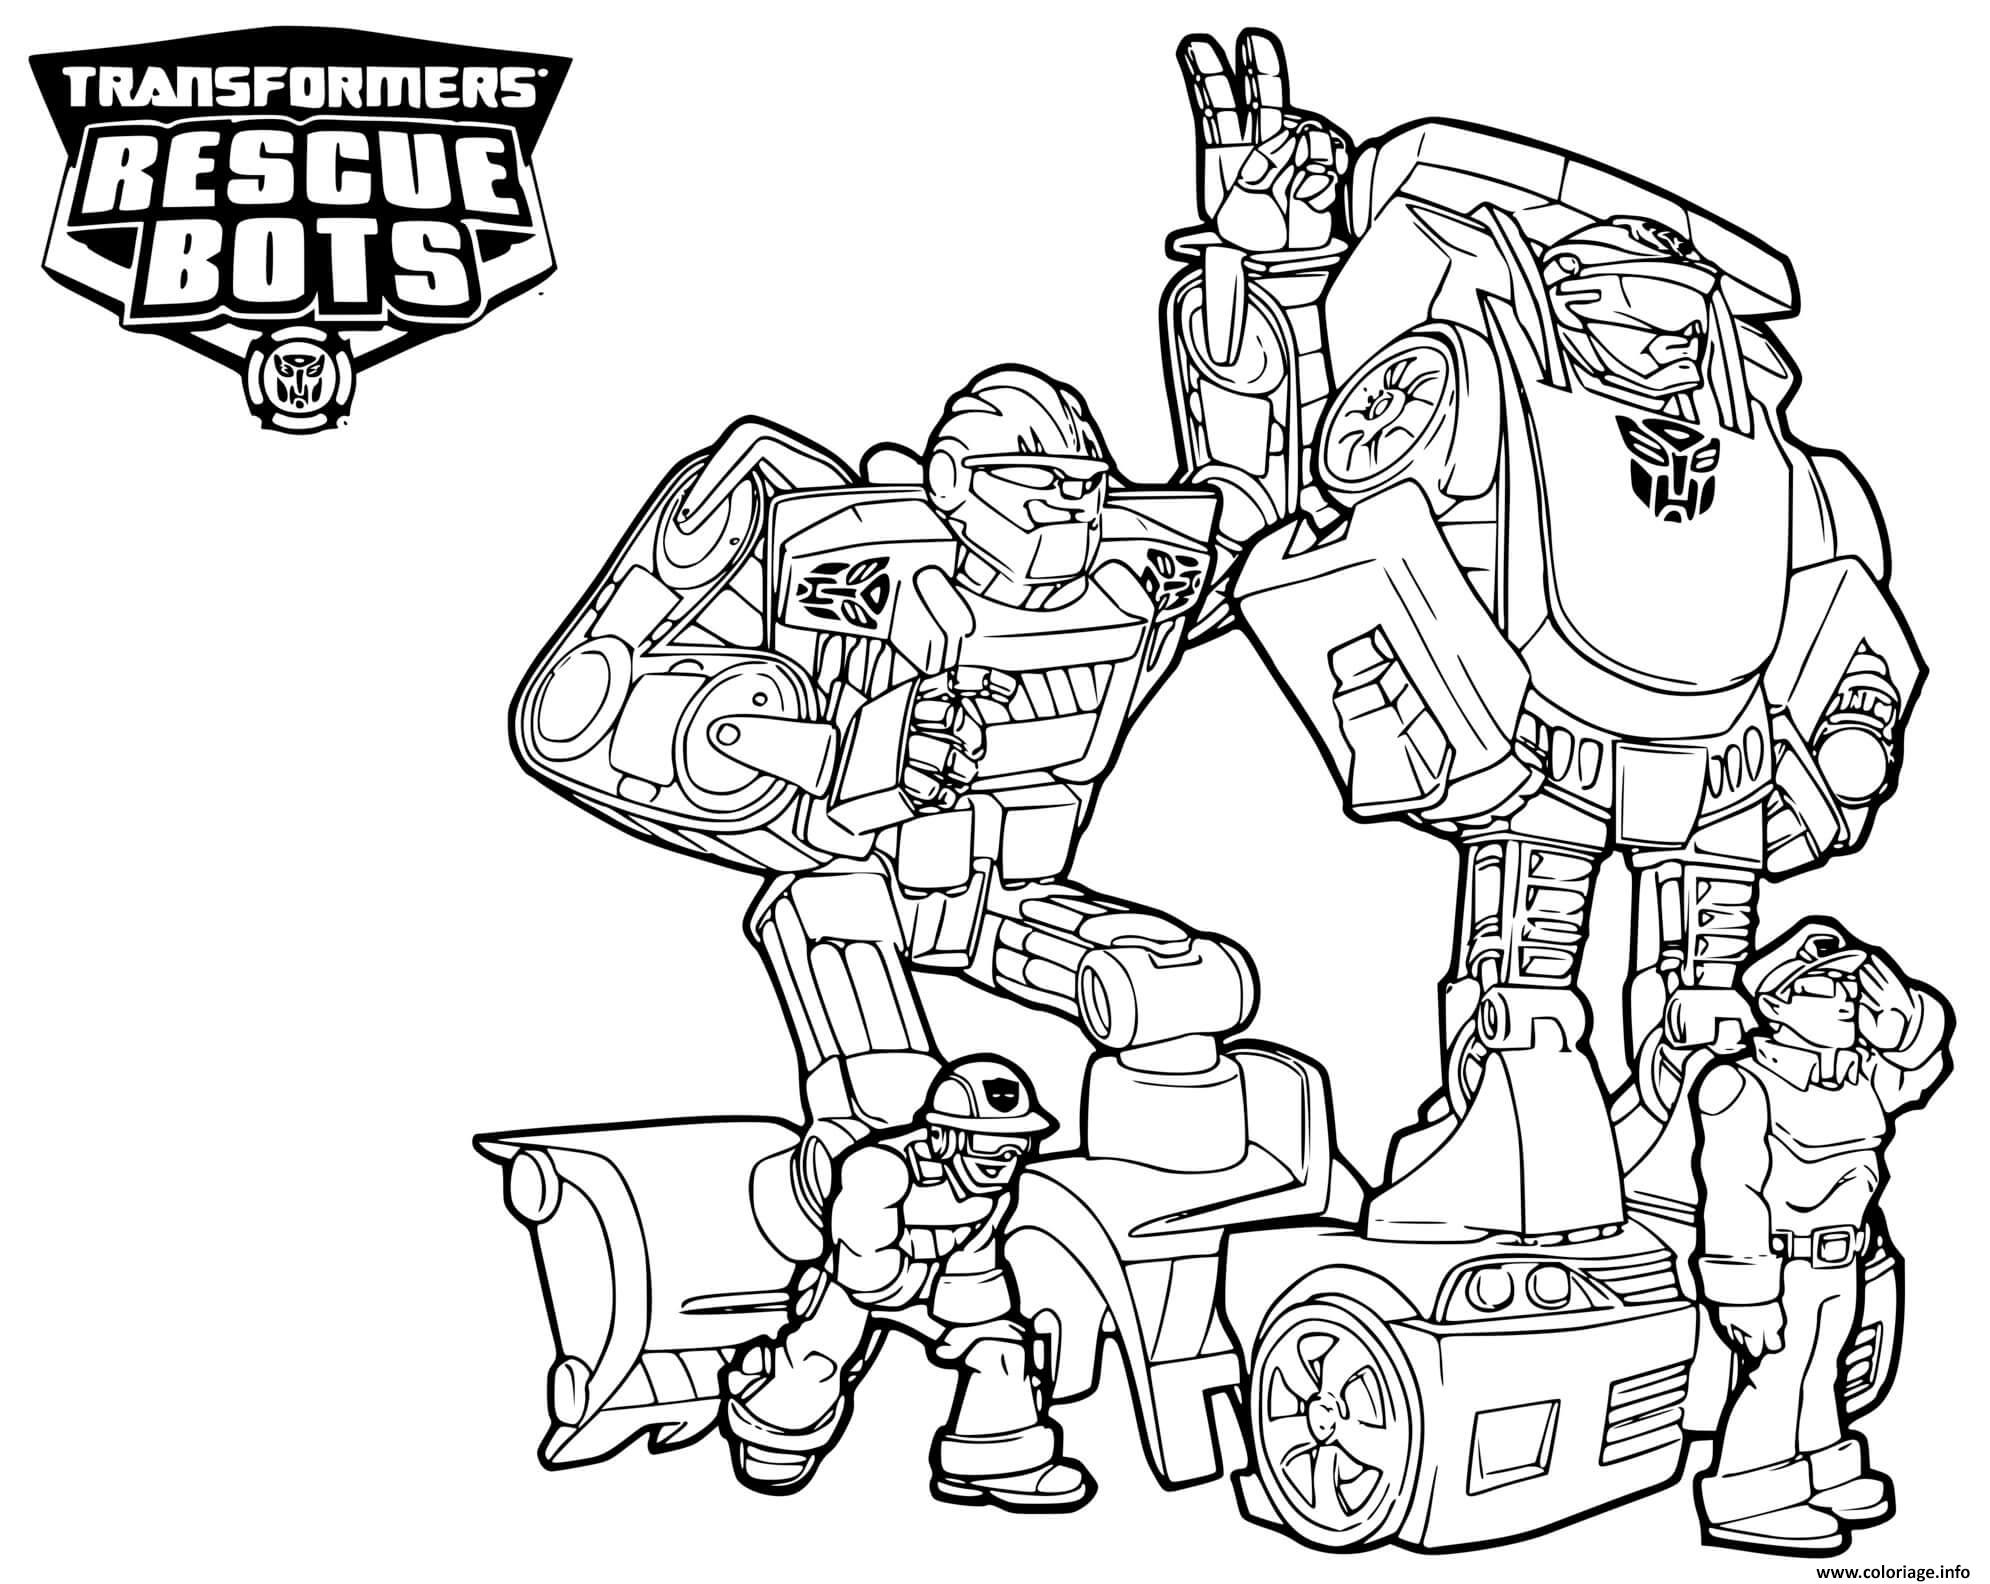 Dessin Characters from Transformers Rescue Bots Coloriage Gratuit à Imprimer